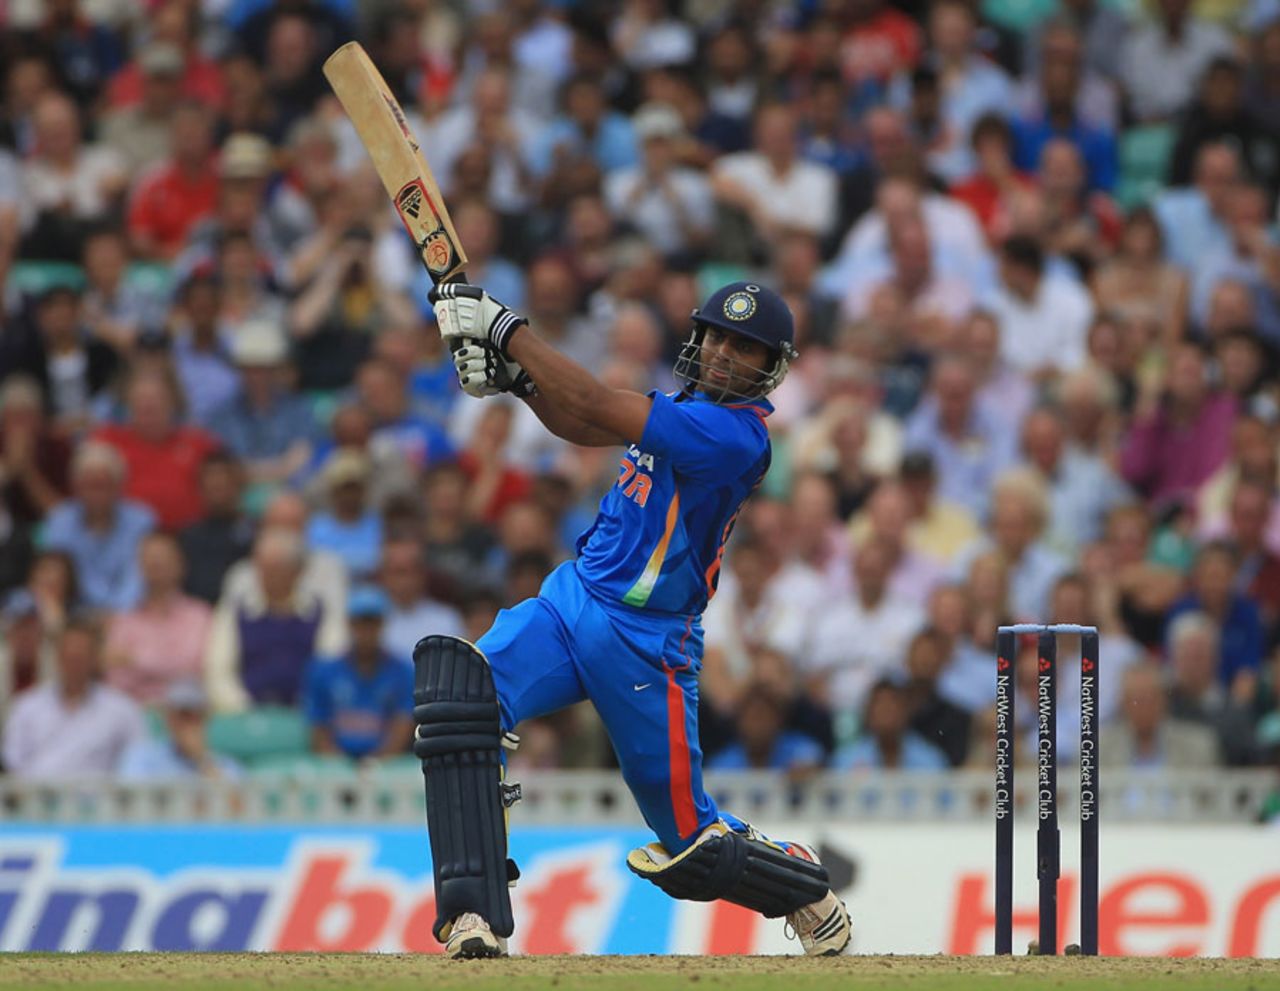 Ravindra Jadeja powers one down the ground, England v India, 3rd ODI, The Oval, September 9 2011